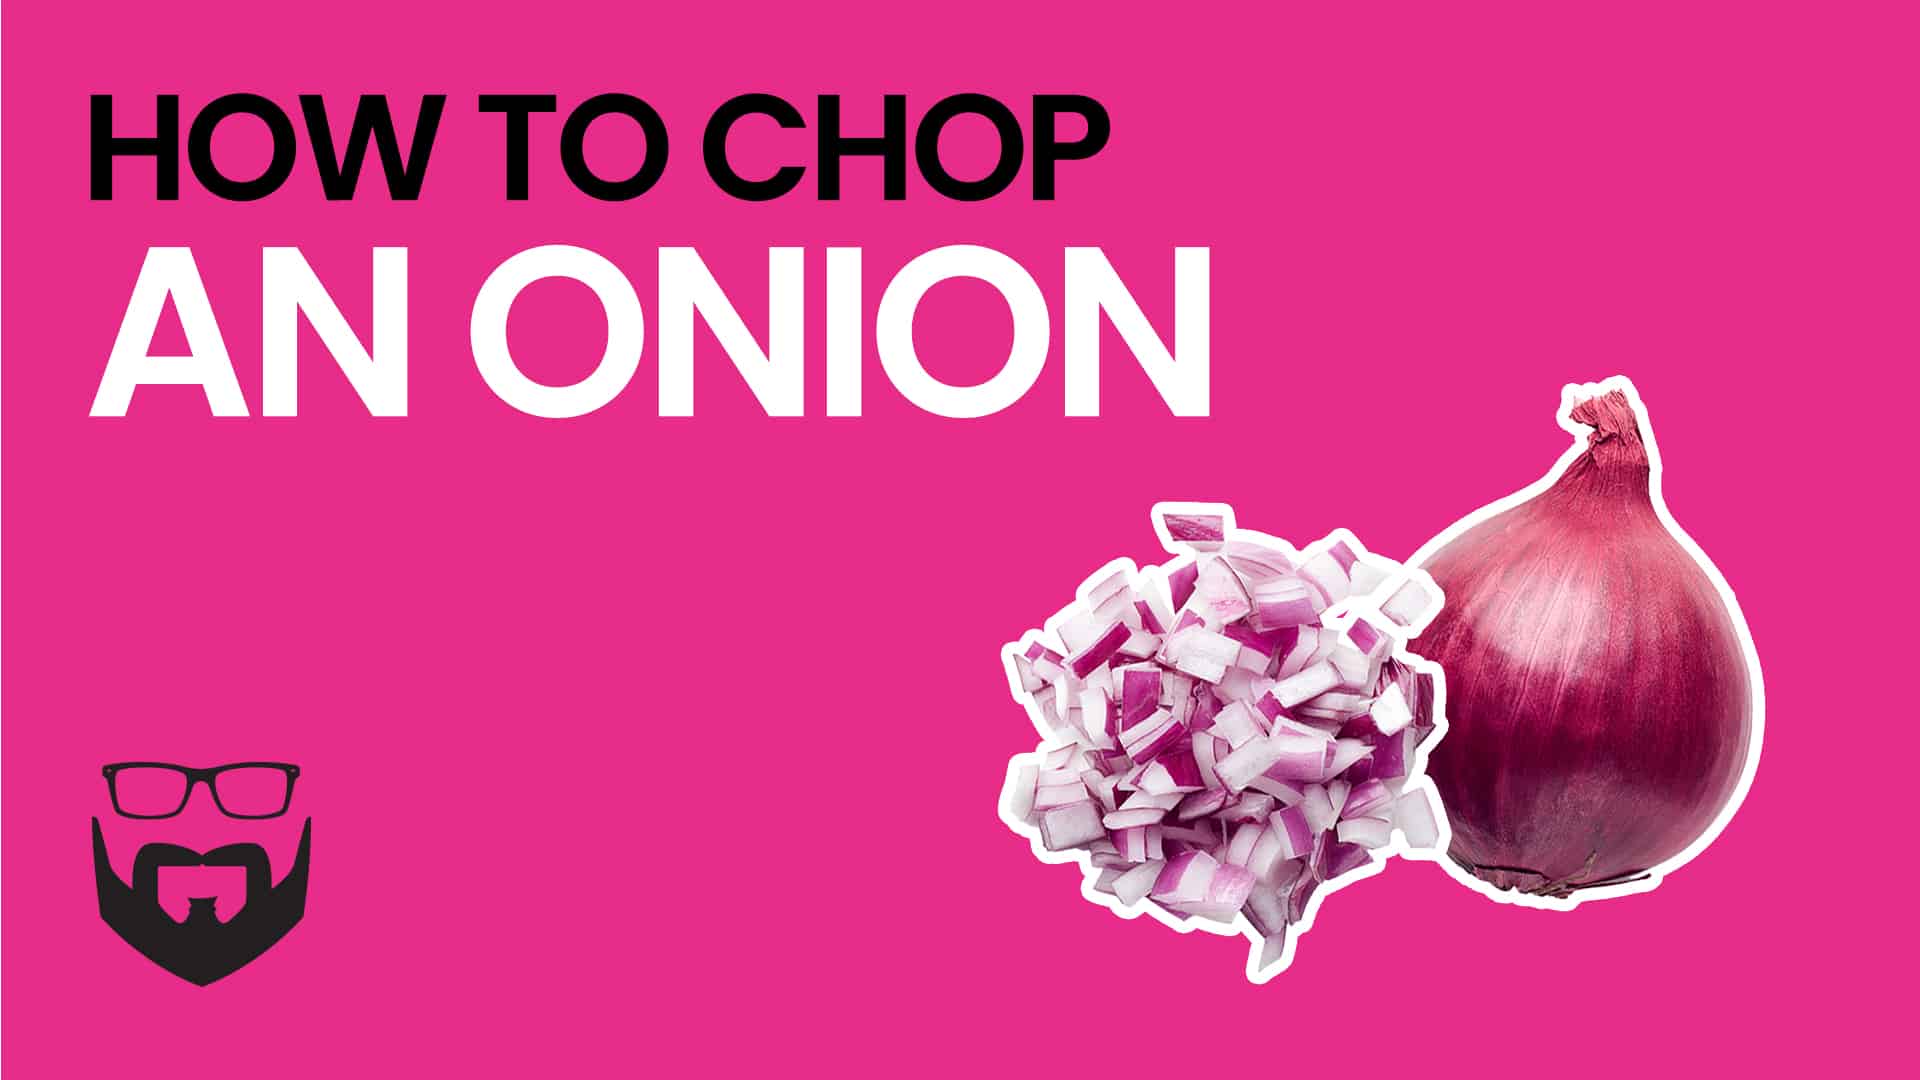 https://jerryjamesstone.com/wp-content/uploads/2023/01/How-to-Chop-an-Onion-Video-Pink.jpg